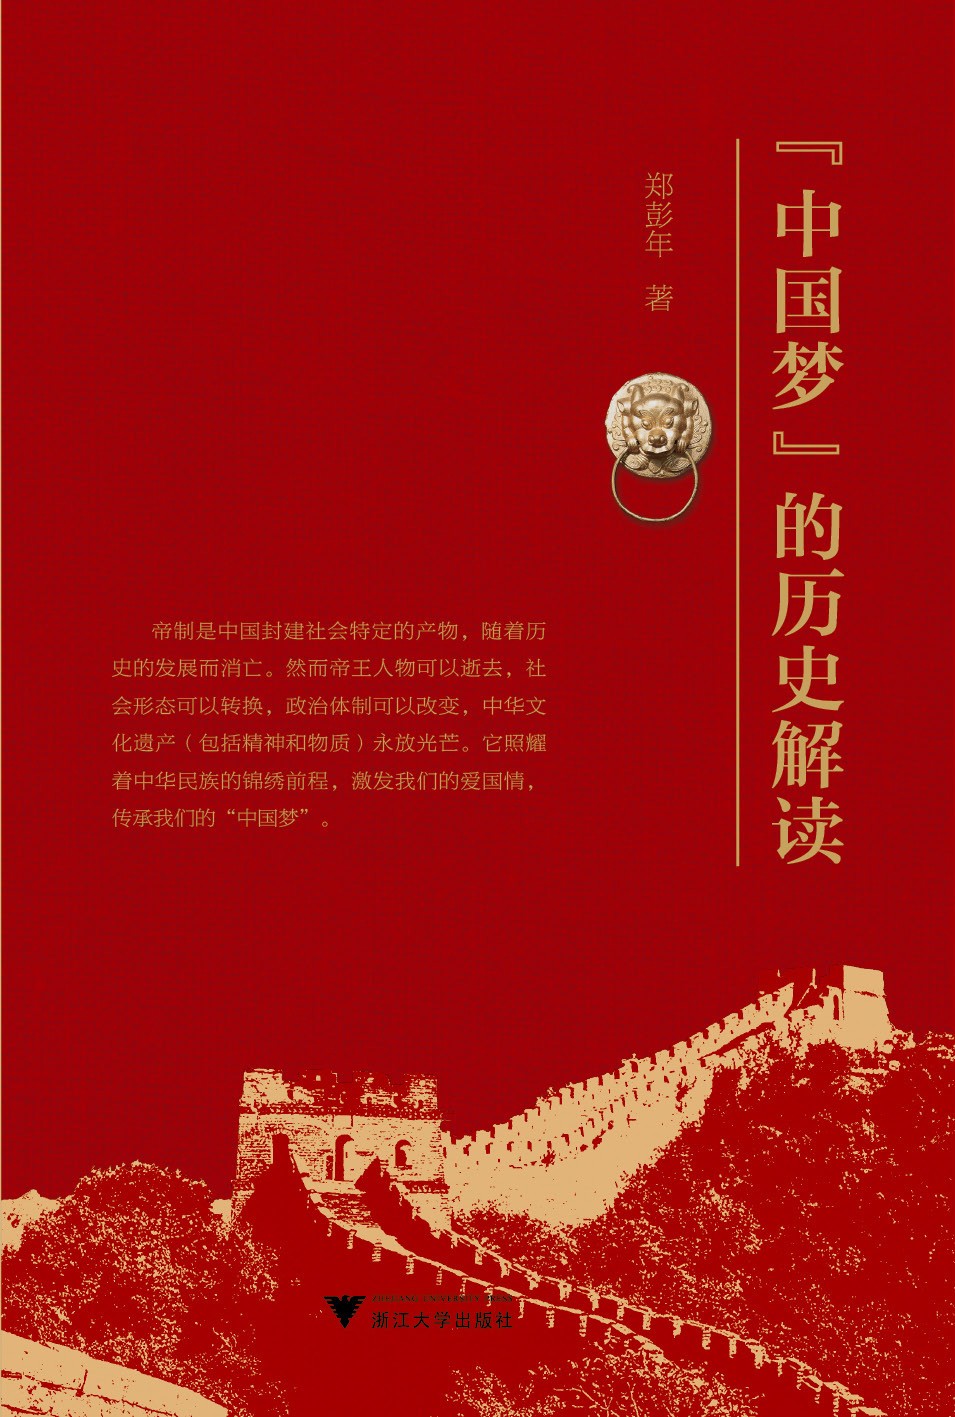 Historical Interpretation of "China Dream"